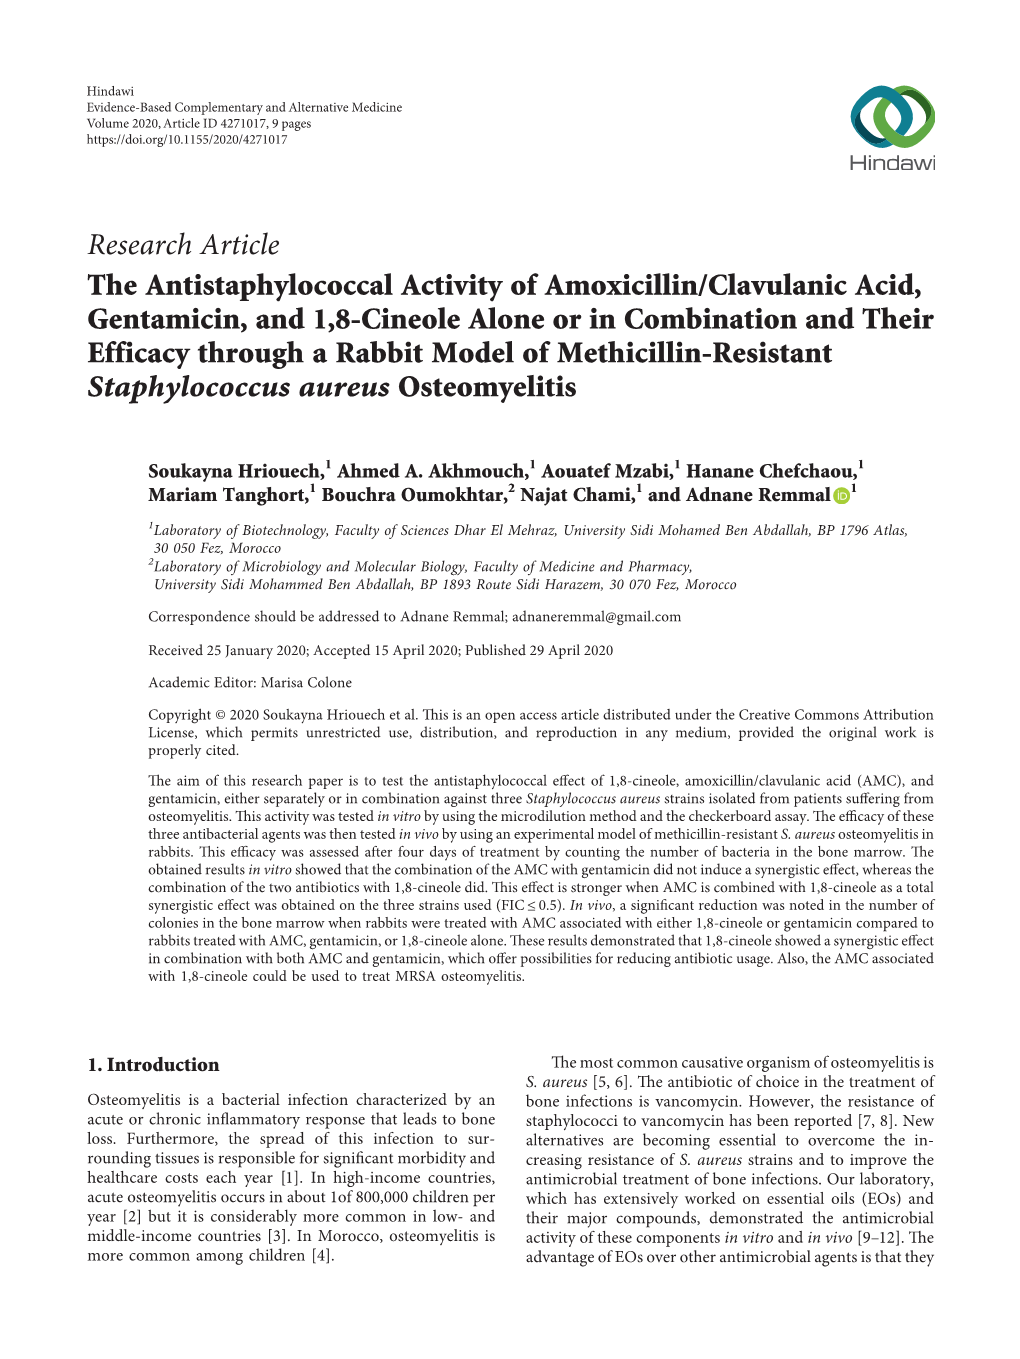 The Antistaphylococcal Activity of Amoxicillin/Clavulanic Acid